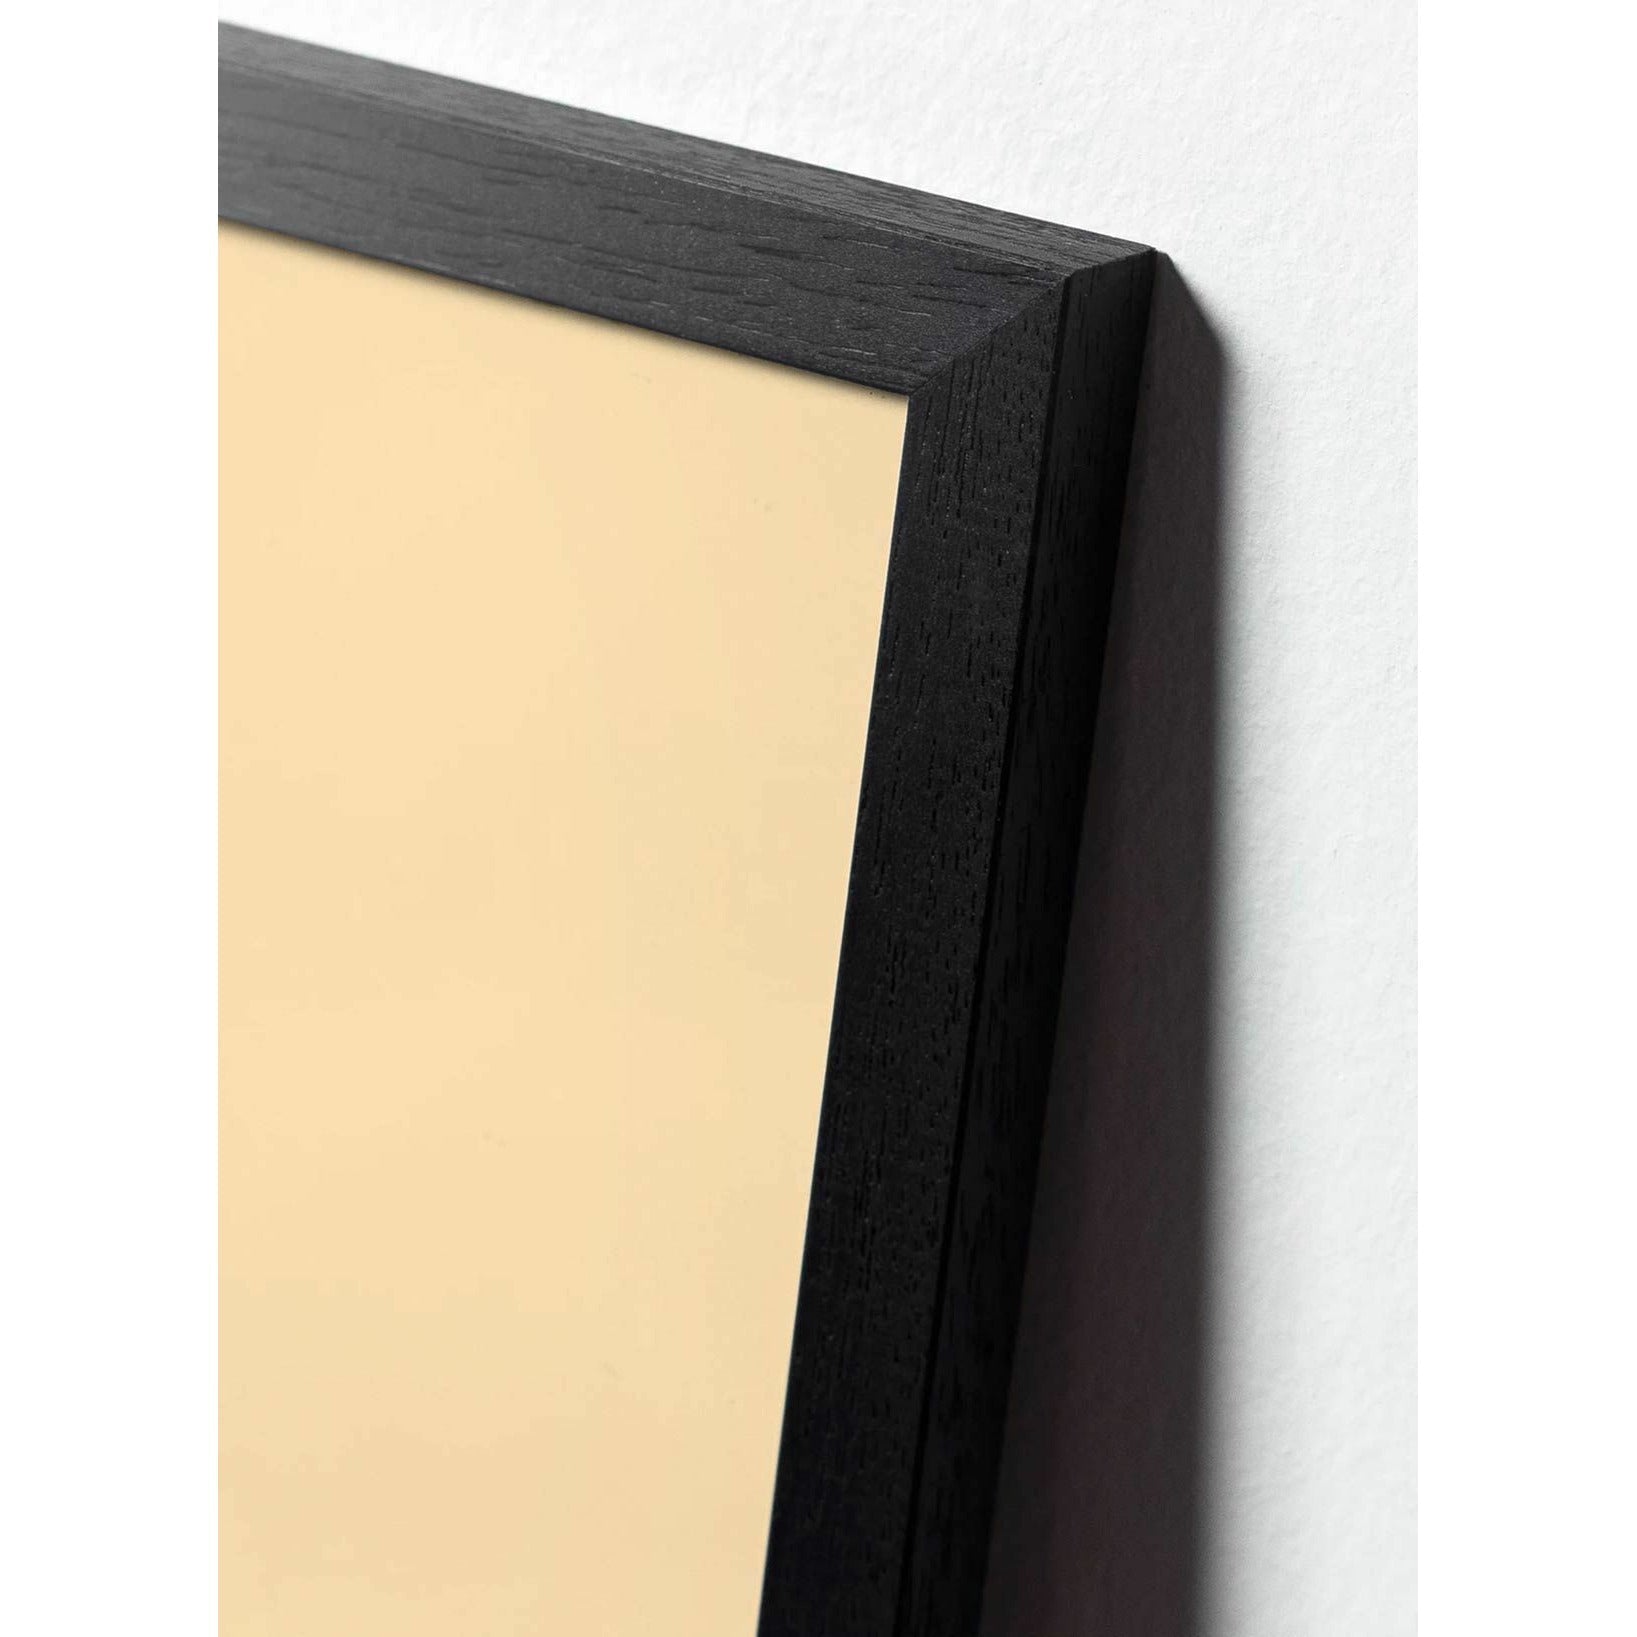 Póster de diseño de diseño de oso de peluche de ideas, marco hecho de madera lacada negra de 70 x100 cm, gris